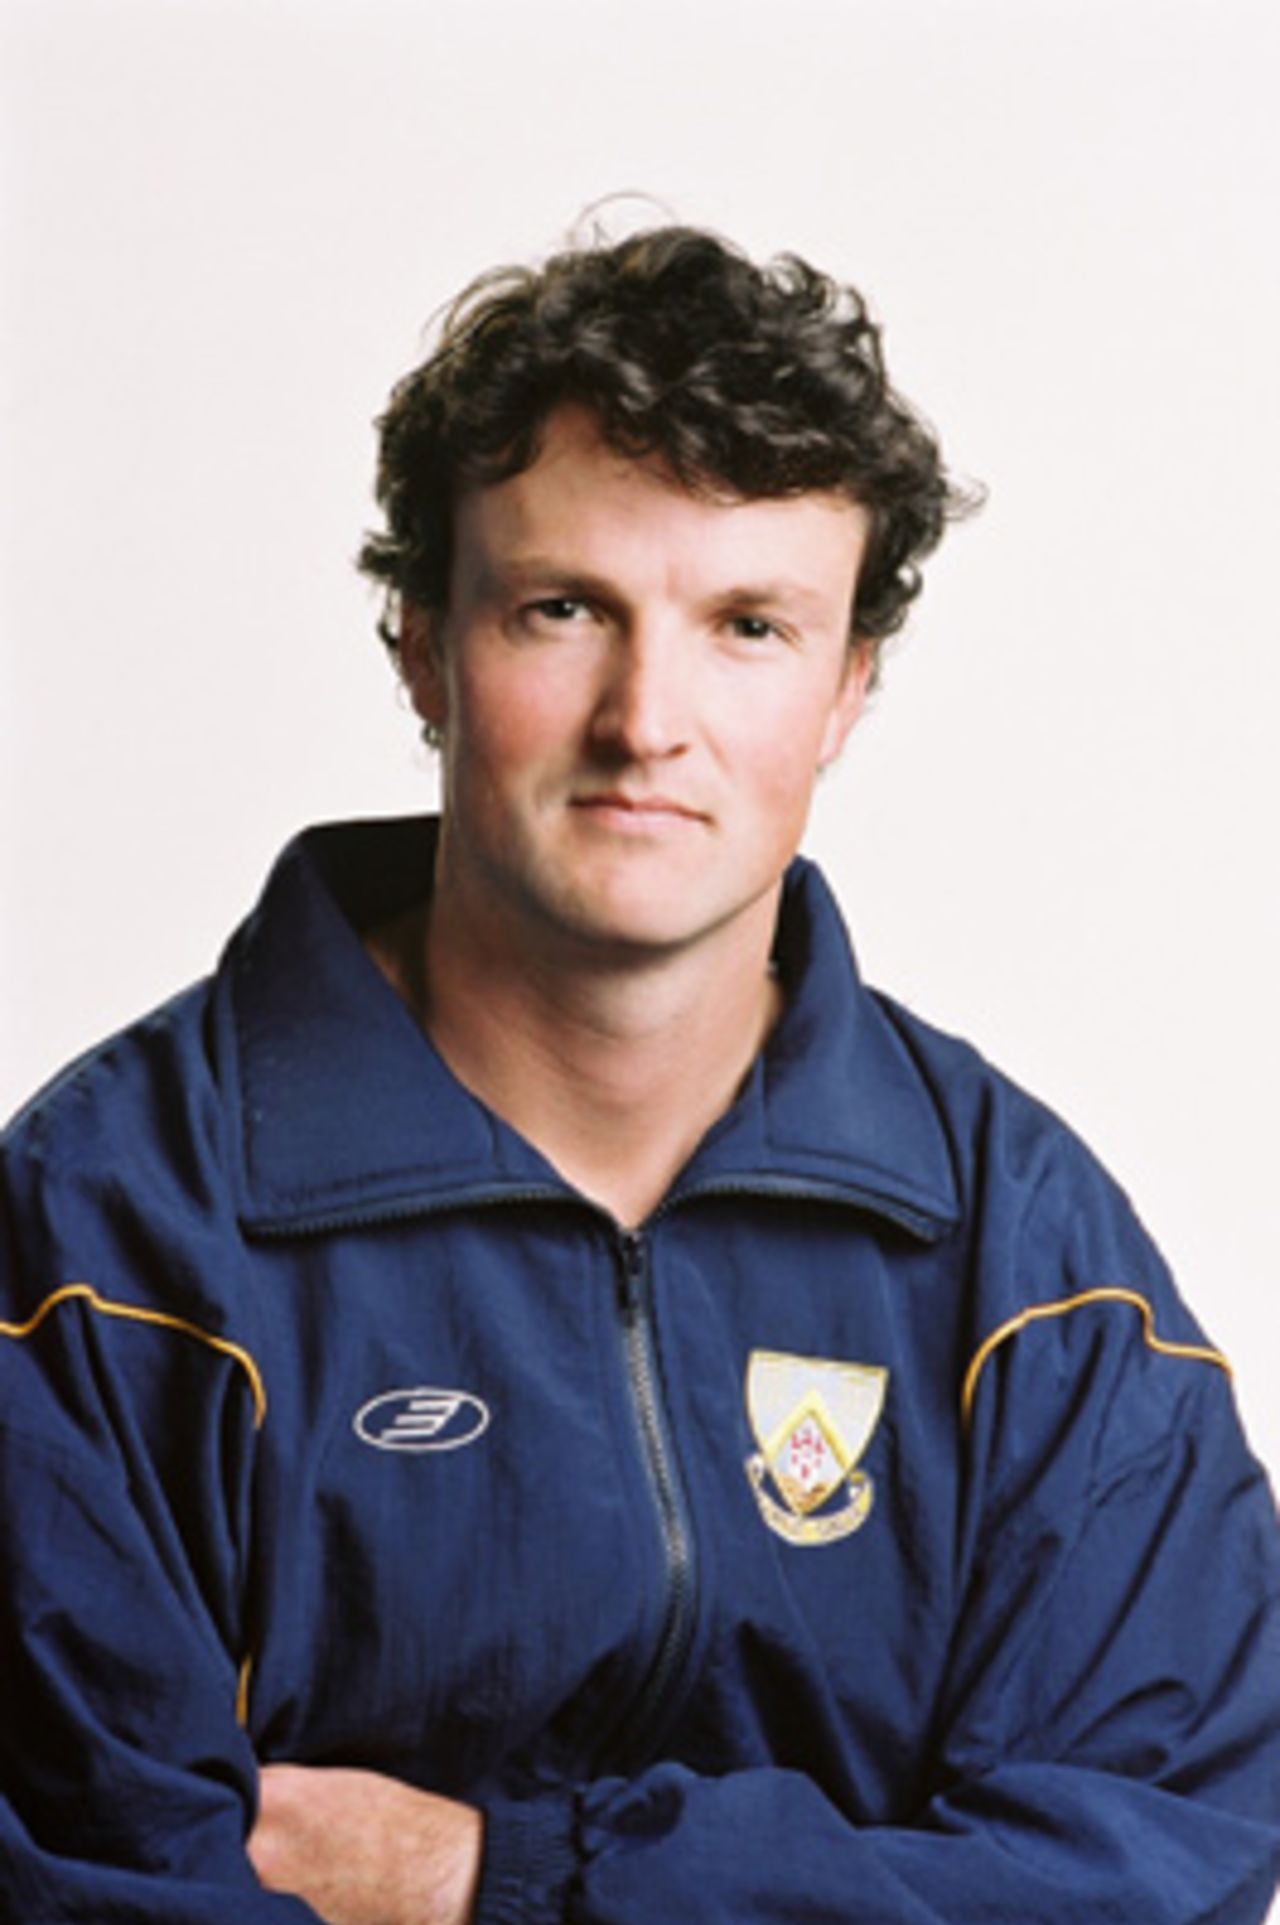 Portrait of Simon Forde - Otago squad member for the 2000/01 season